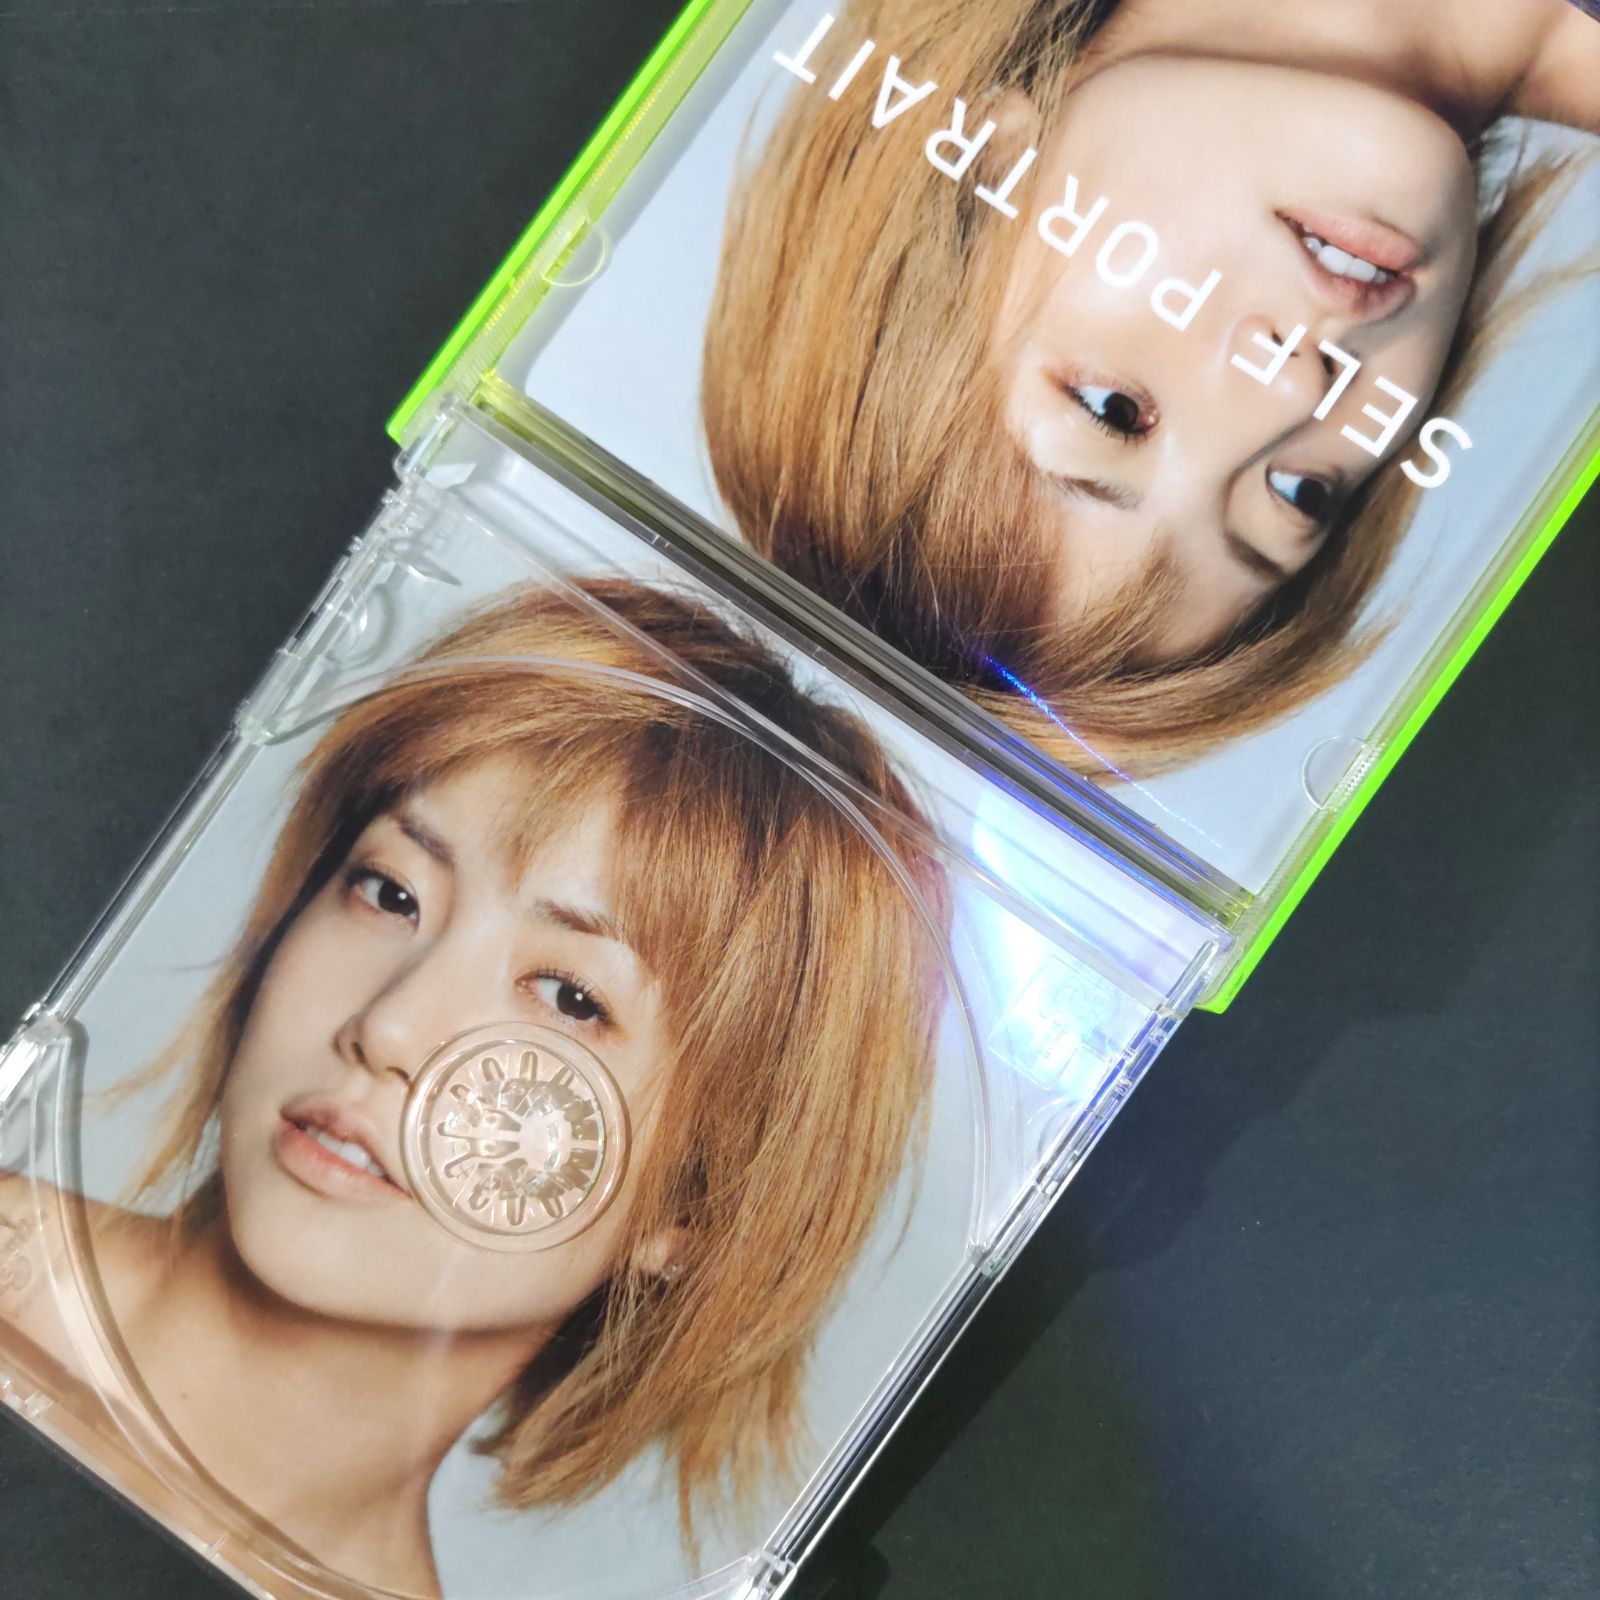 🍄hitomi2枚組ベストアルバム 「hitomi/SELF PORTRAIT」【2CD】 - メルカリ